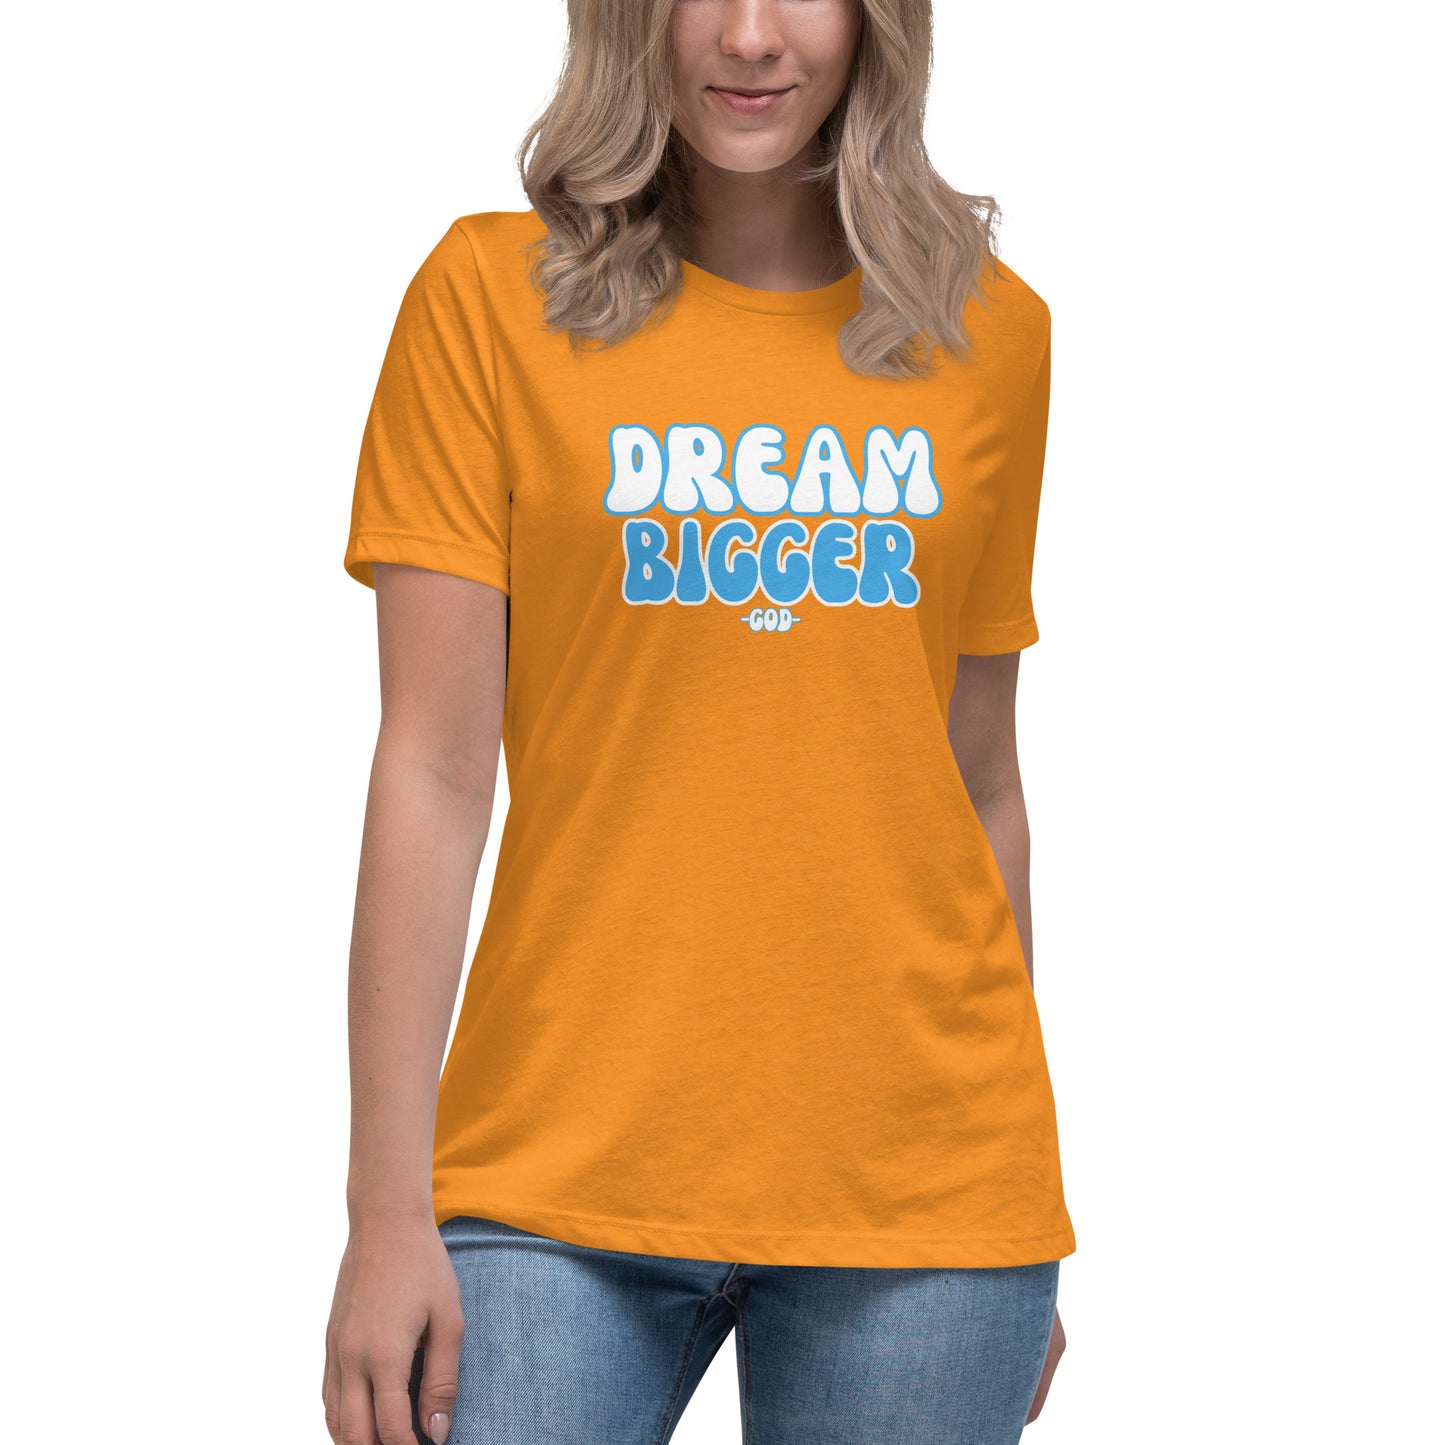 DREAM BIGGER -GOD- Women's Relaxed T-Shirt